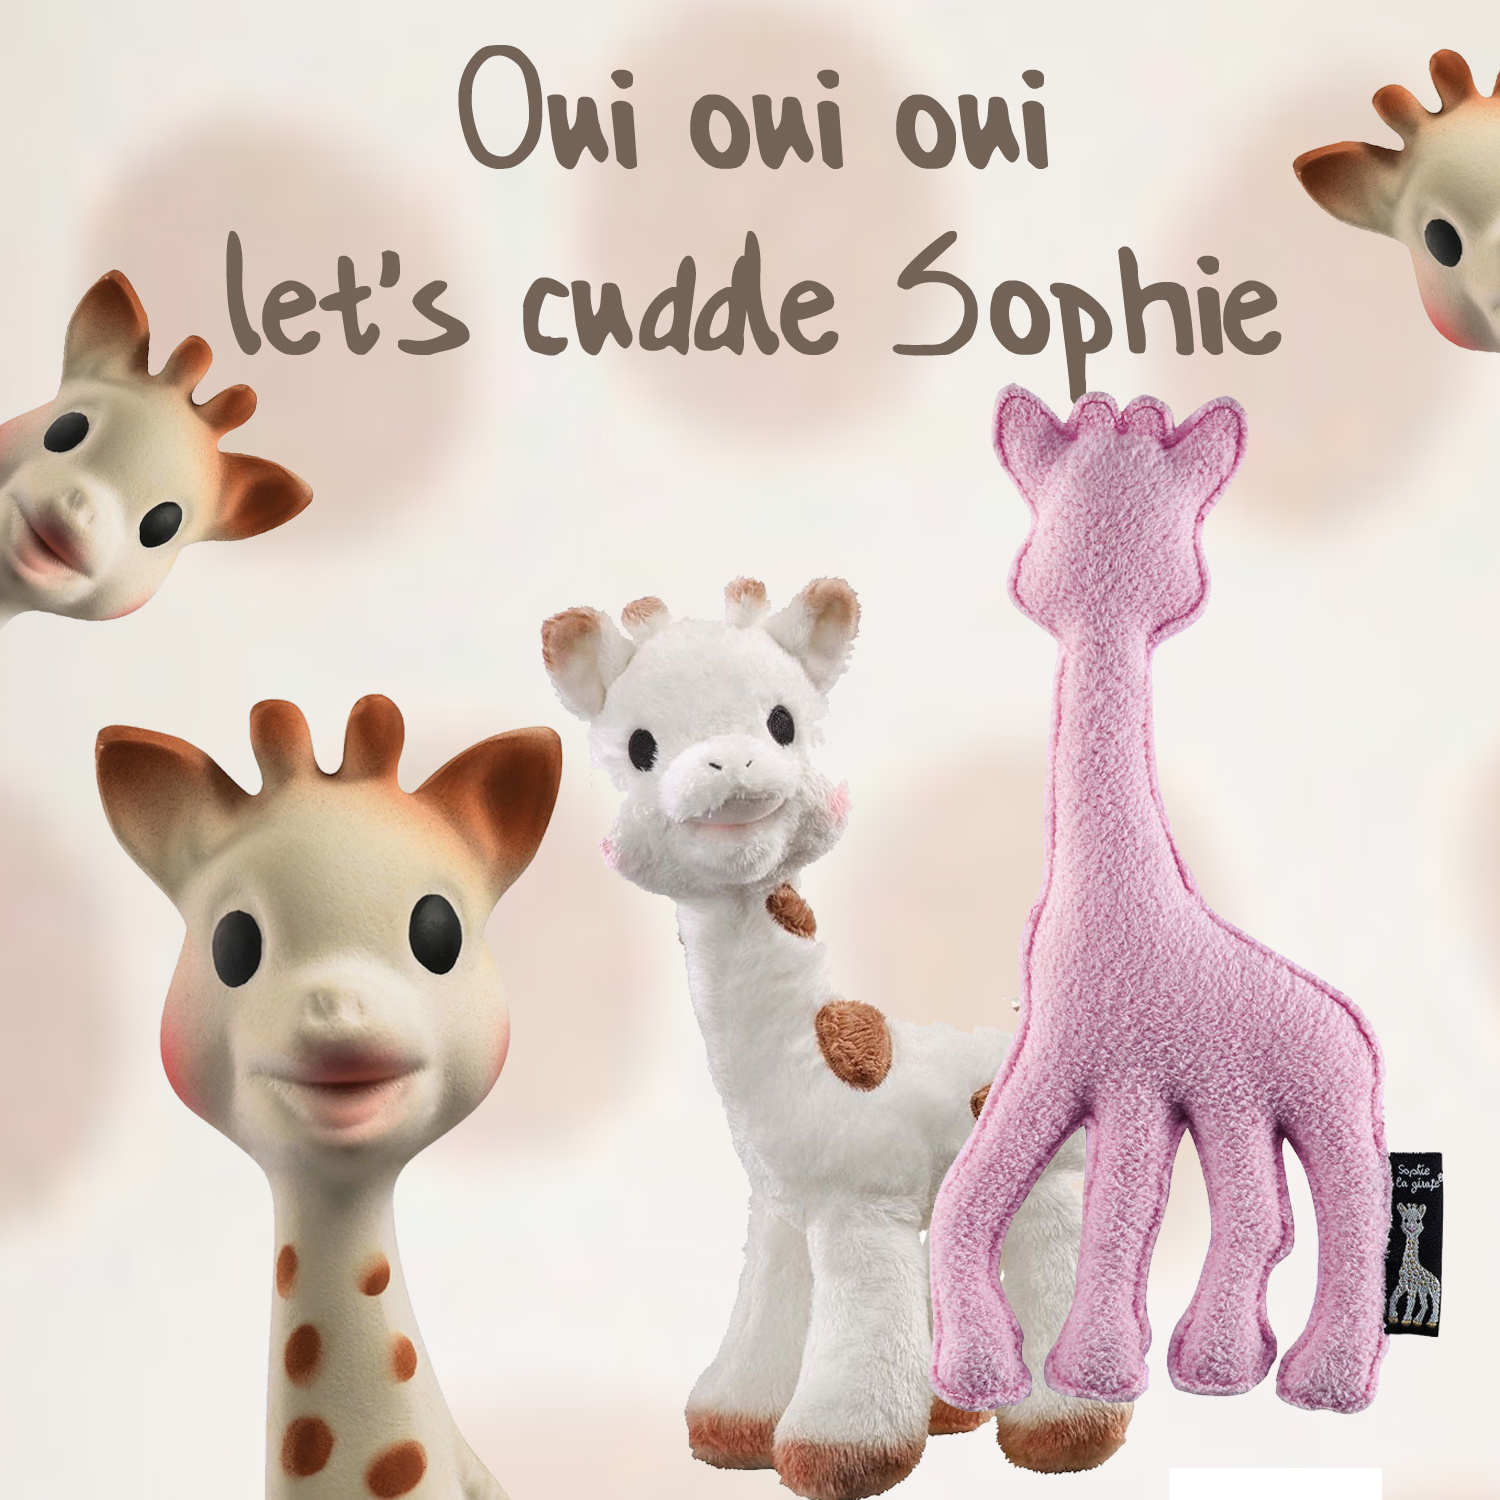 Sophie la girafe / Vulli Vulli / Sophie the giraffe soft toy pink